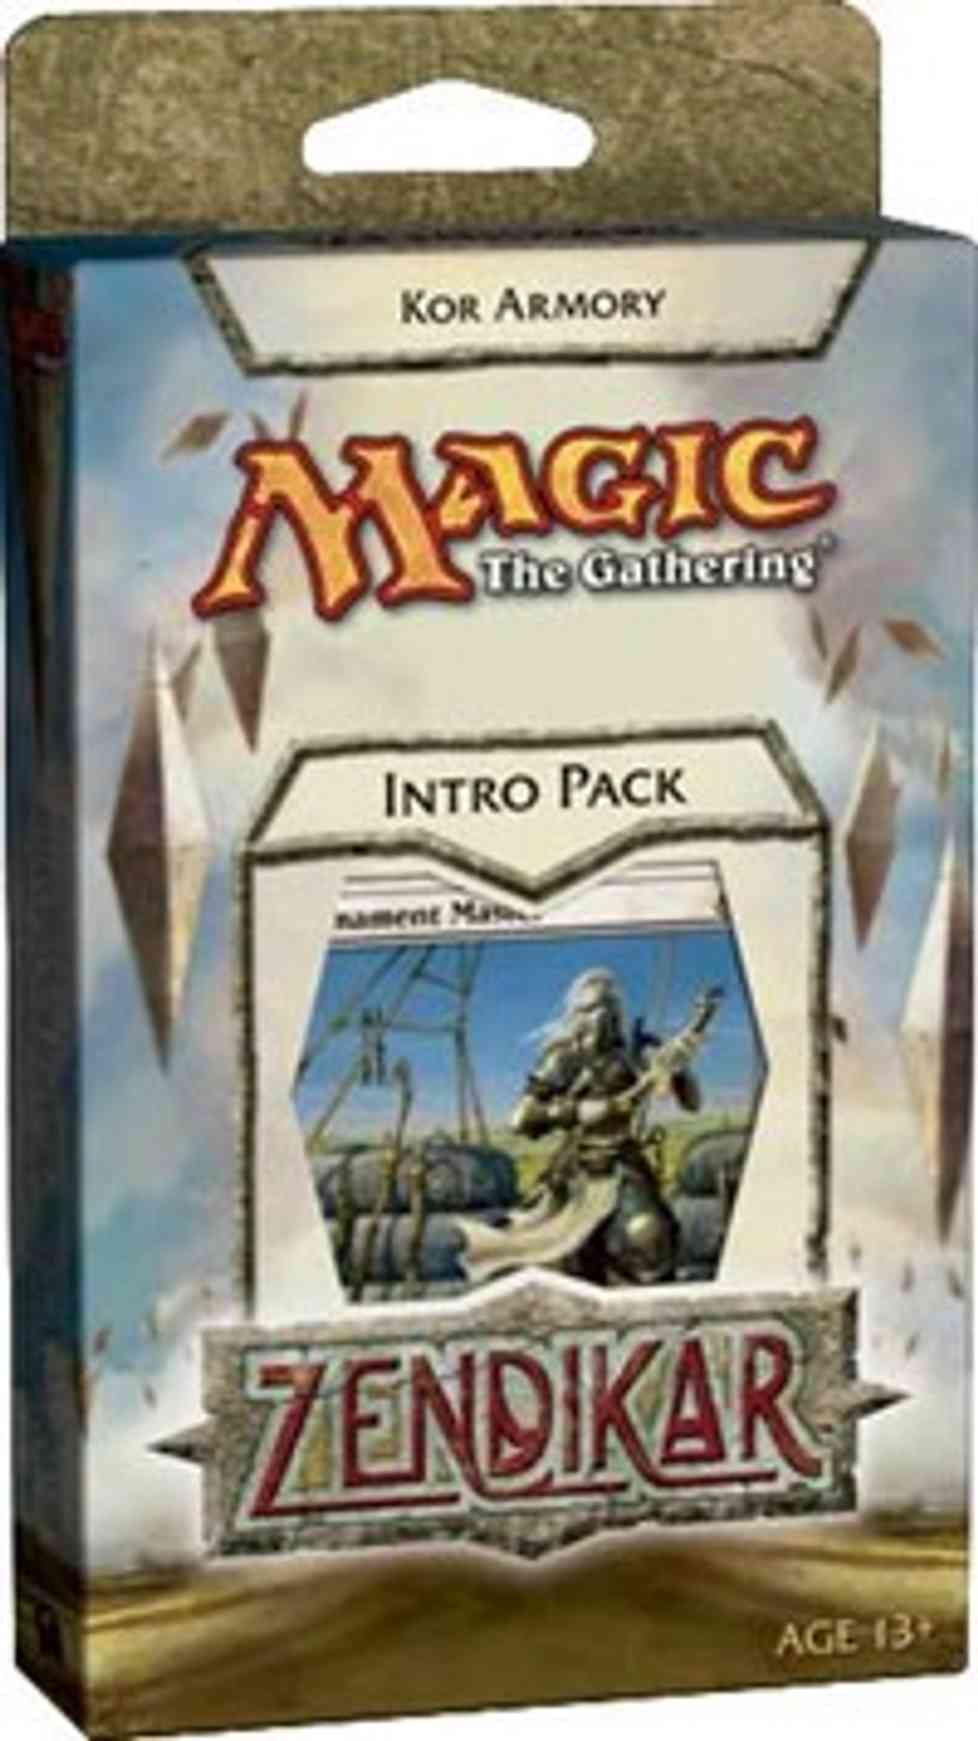 Zendikar - Intro Pack - White - Kor Armory magic card front